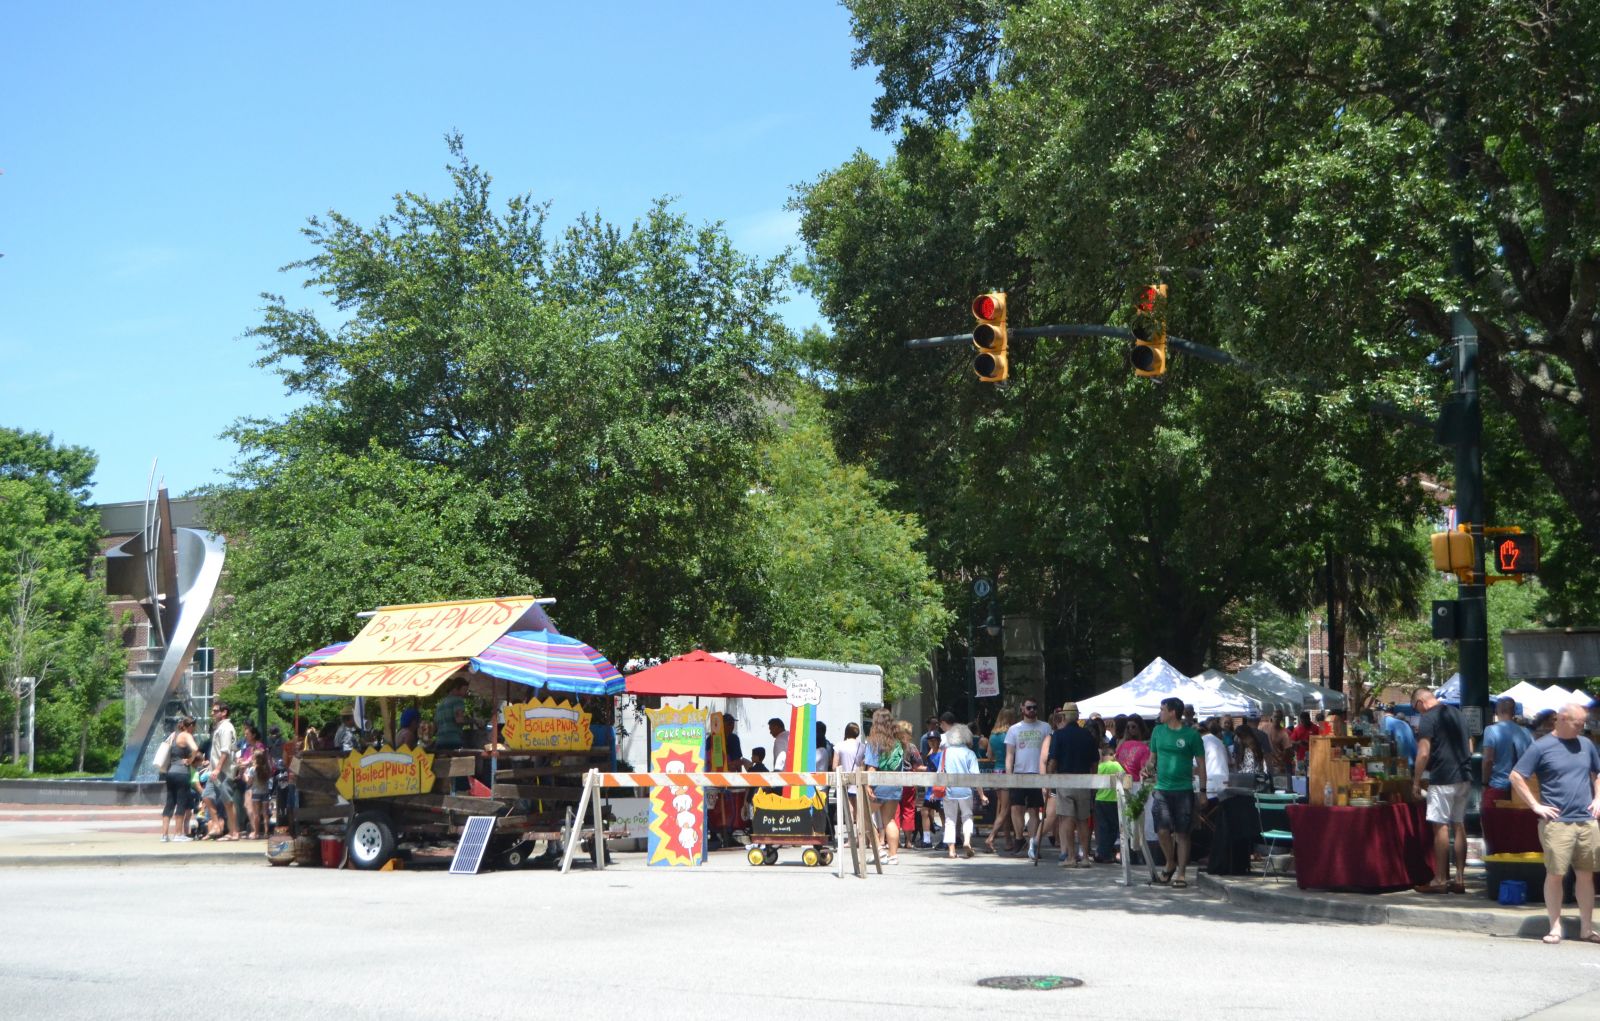 Up to 7,000 people visit Soda City Market on Main Street each week. (Photo/Melinda Waldrop)